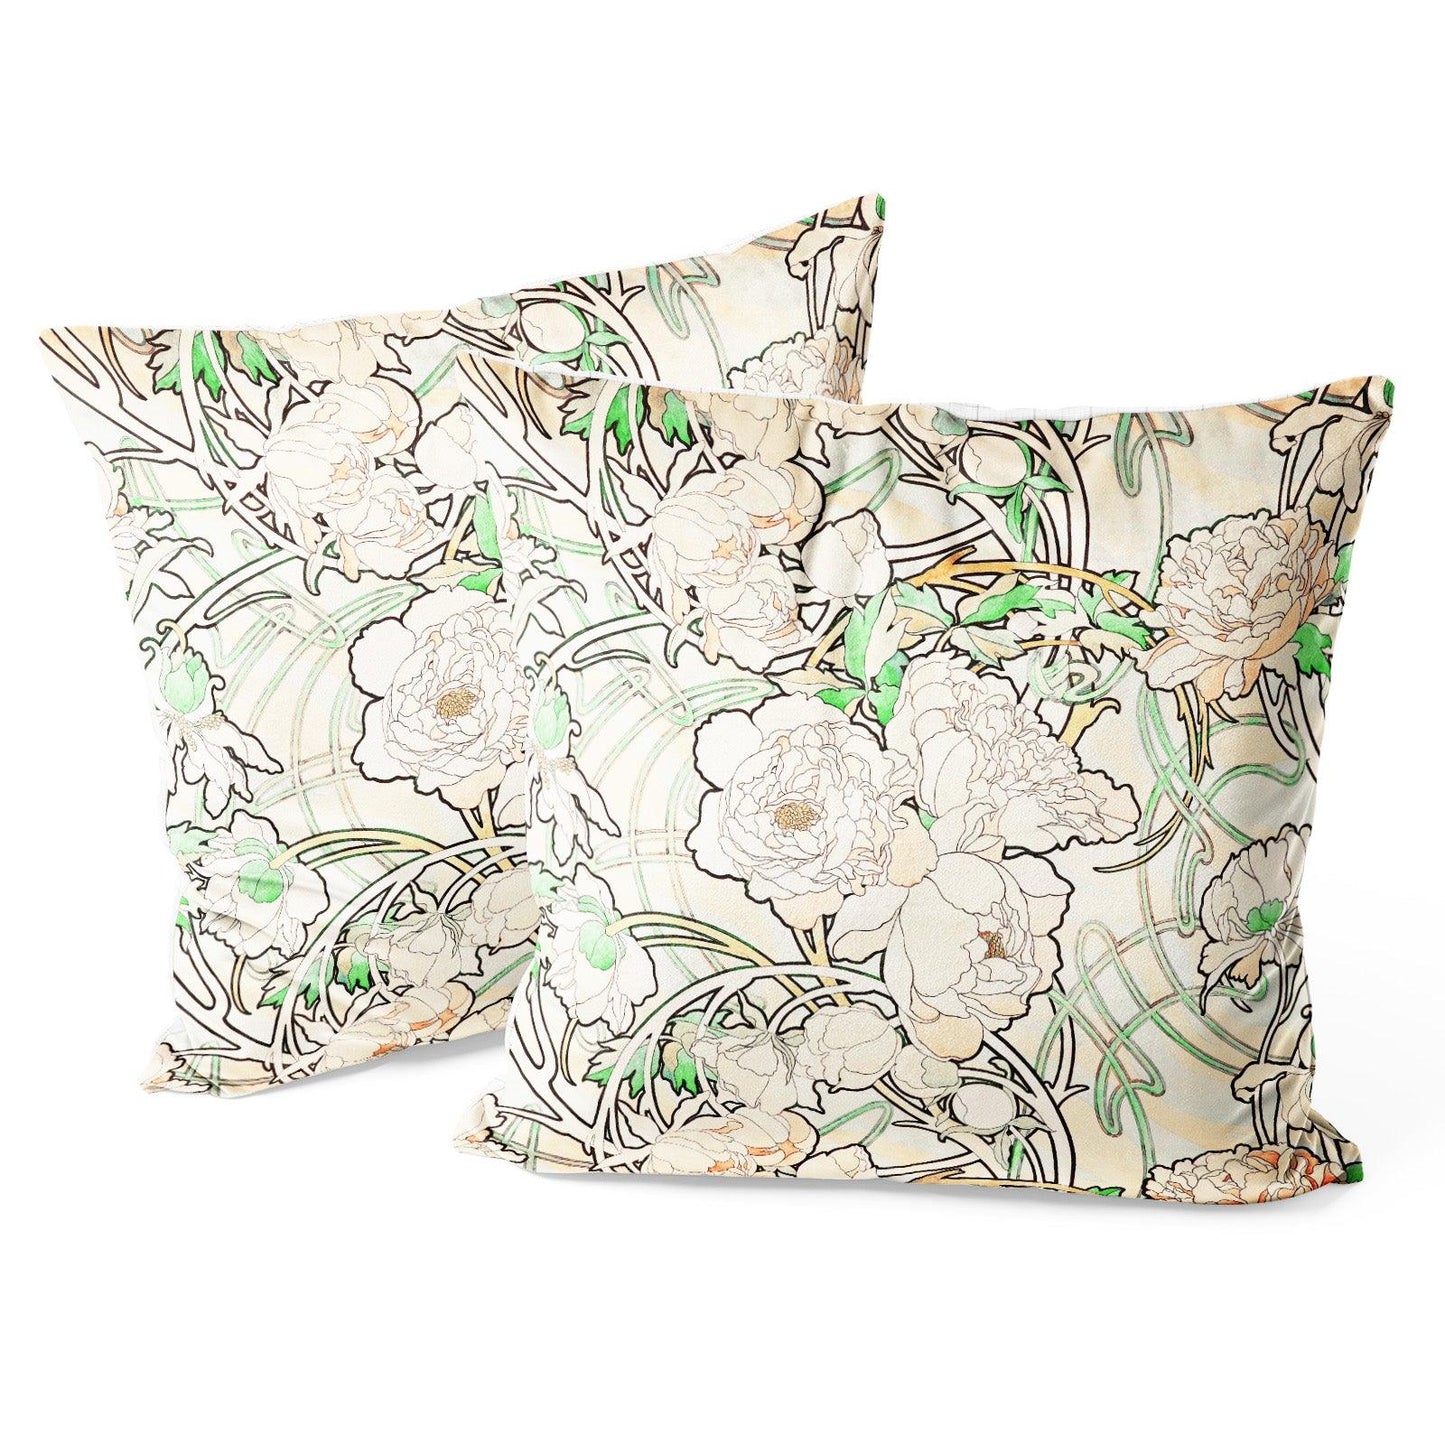 Art Flower Throw Pillow Covers Pack of 2 18x18 Inch (Peonies by Alphonse Mucha) - Berkin Arts